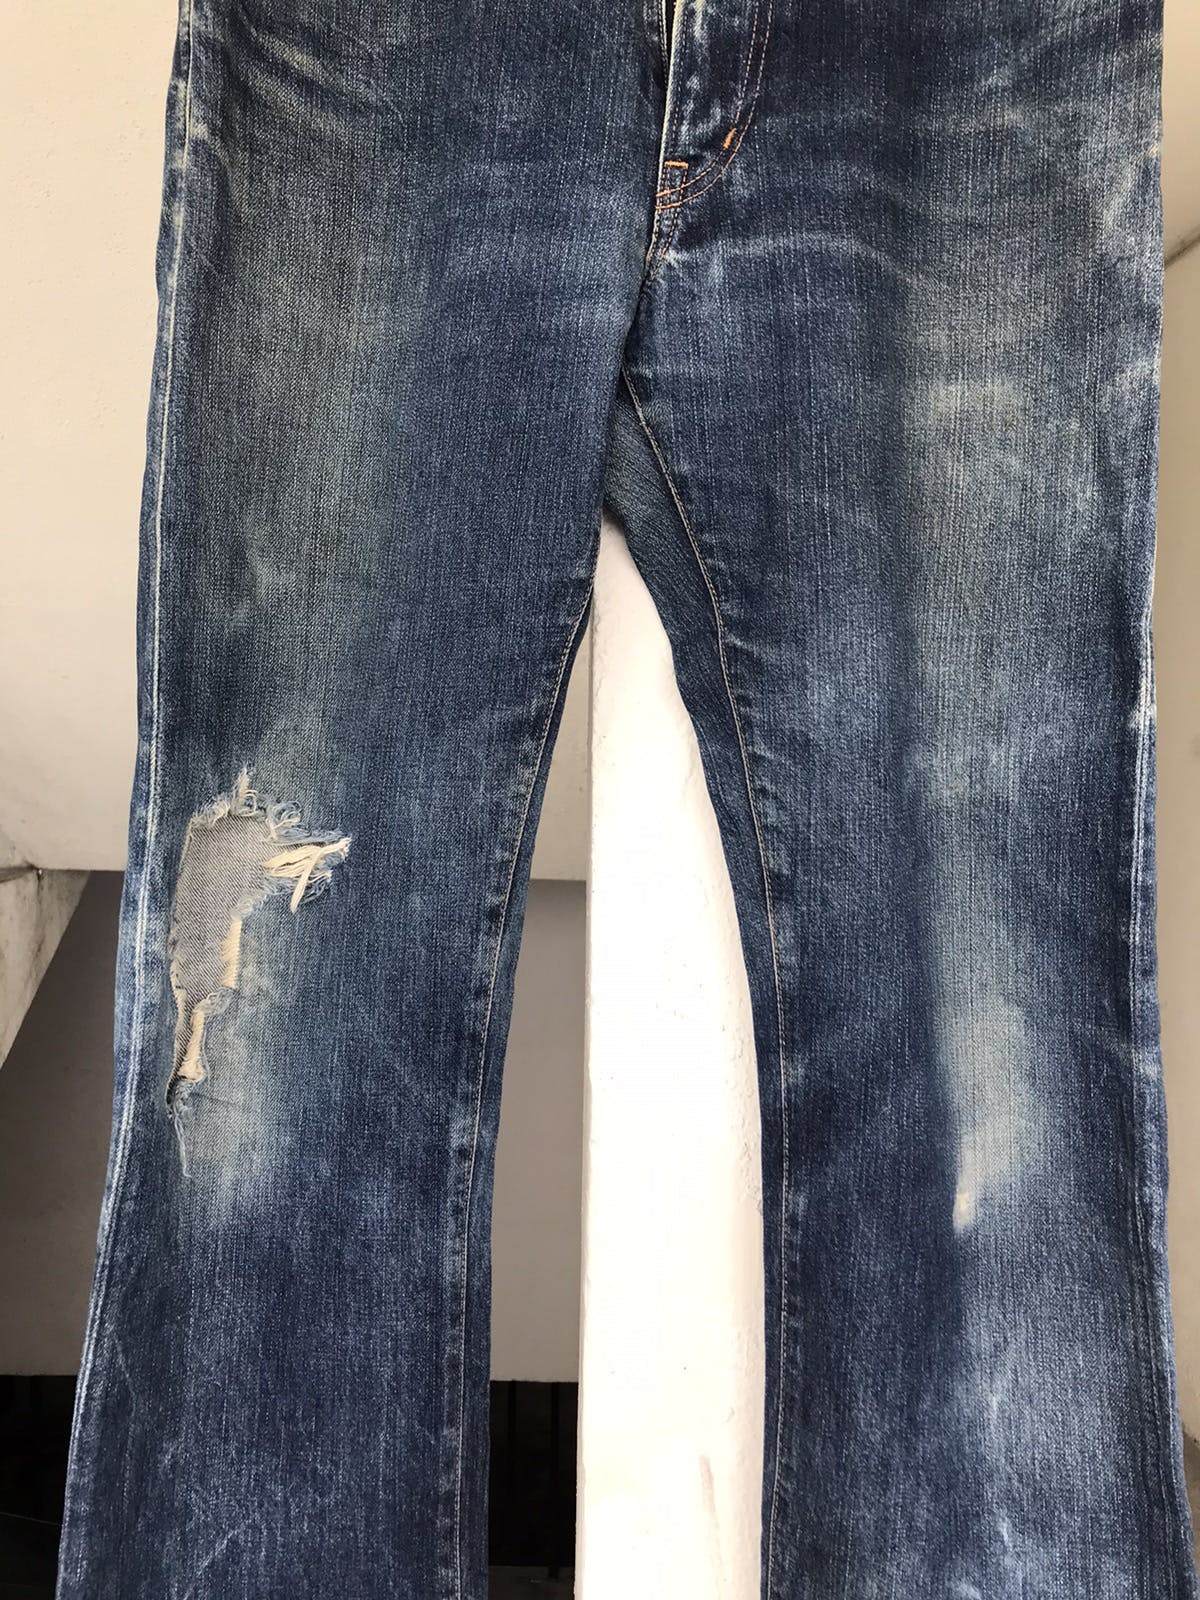 90s Hollywood Ranch Marrket Denim Jeans - 4